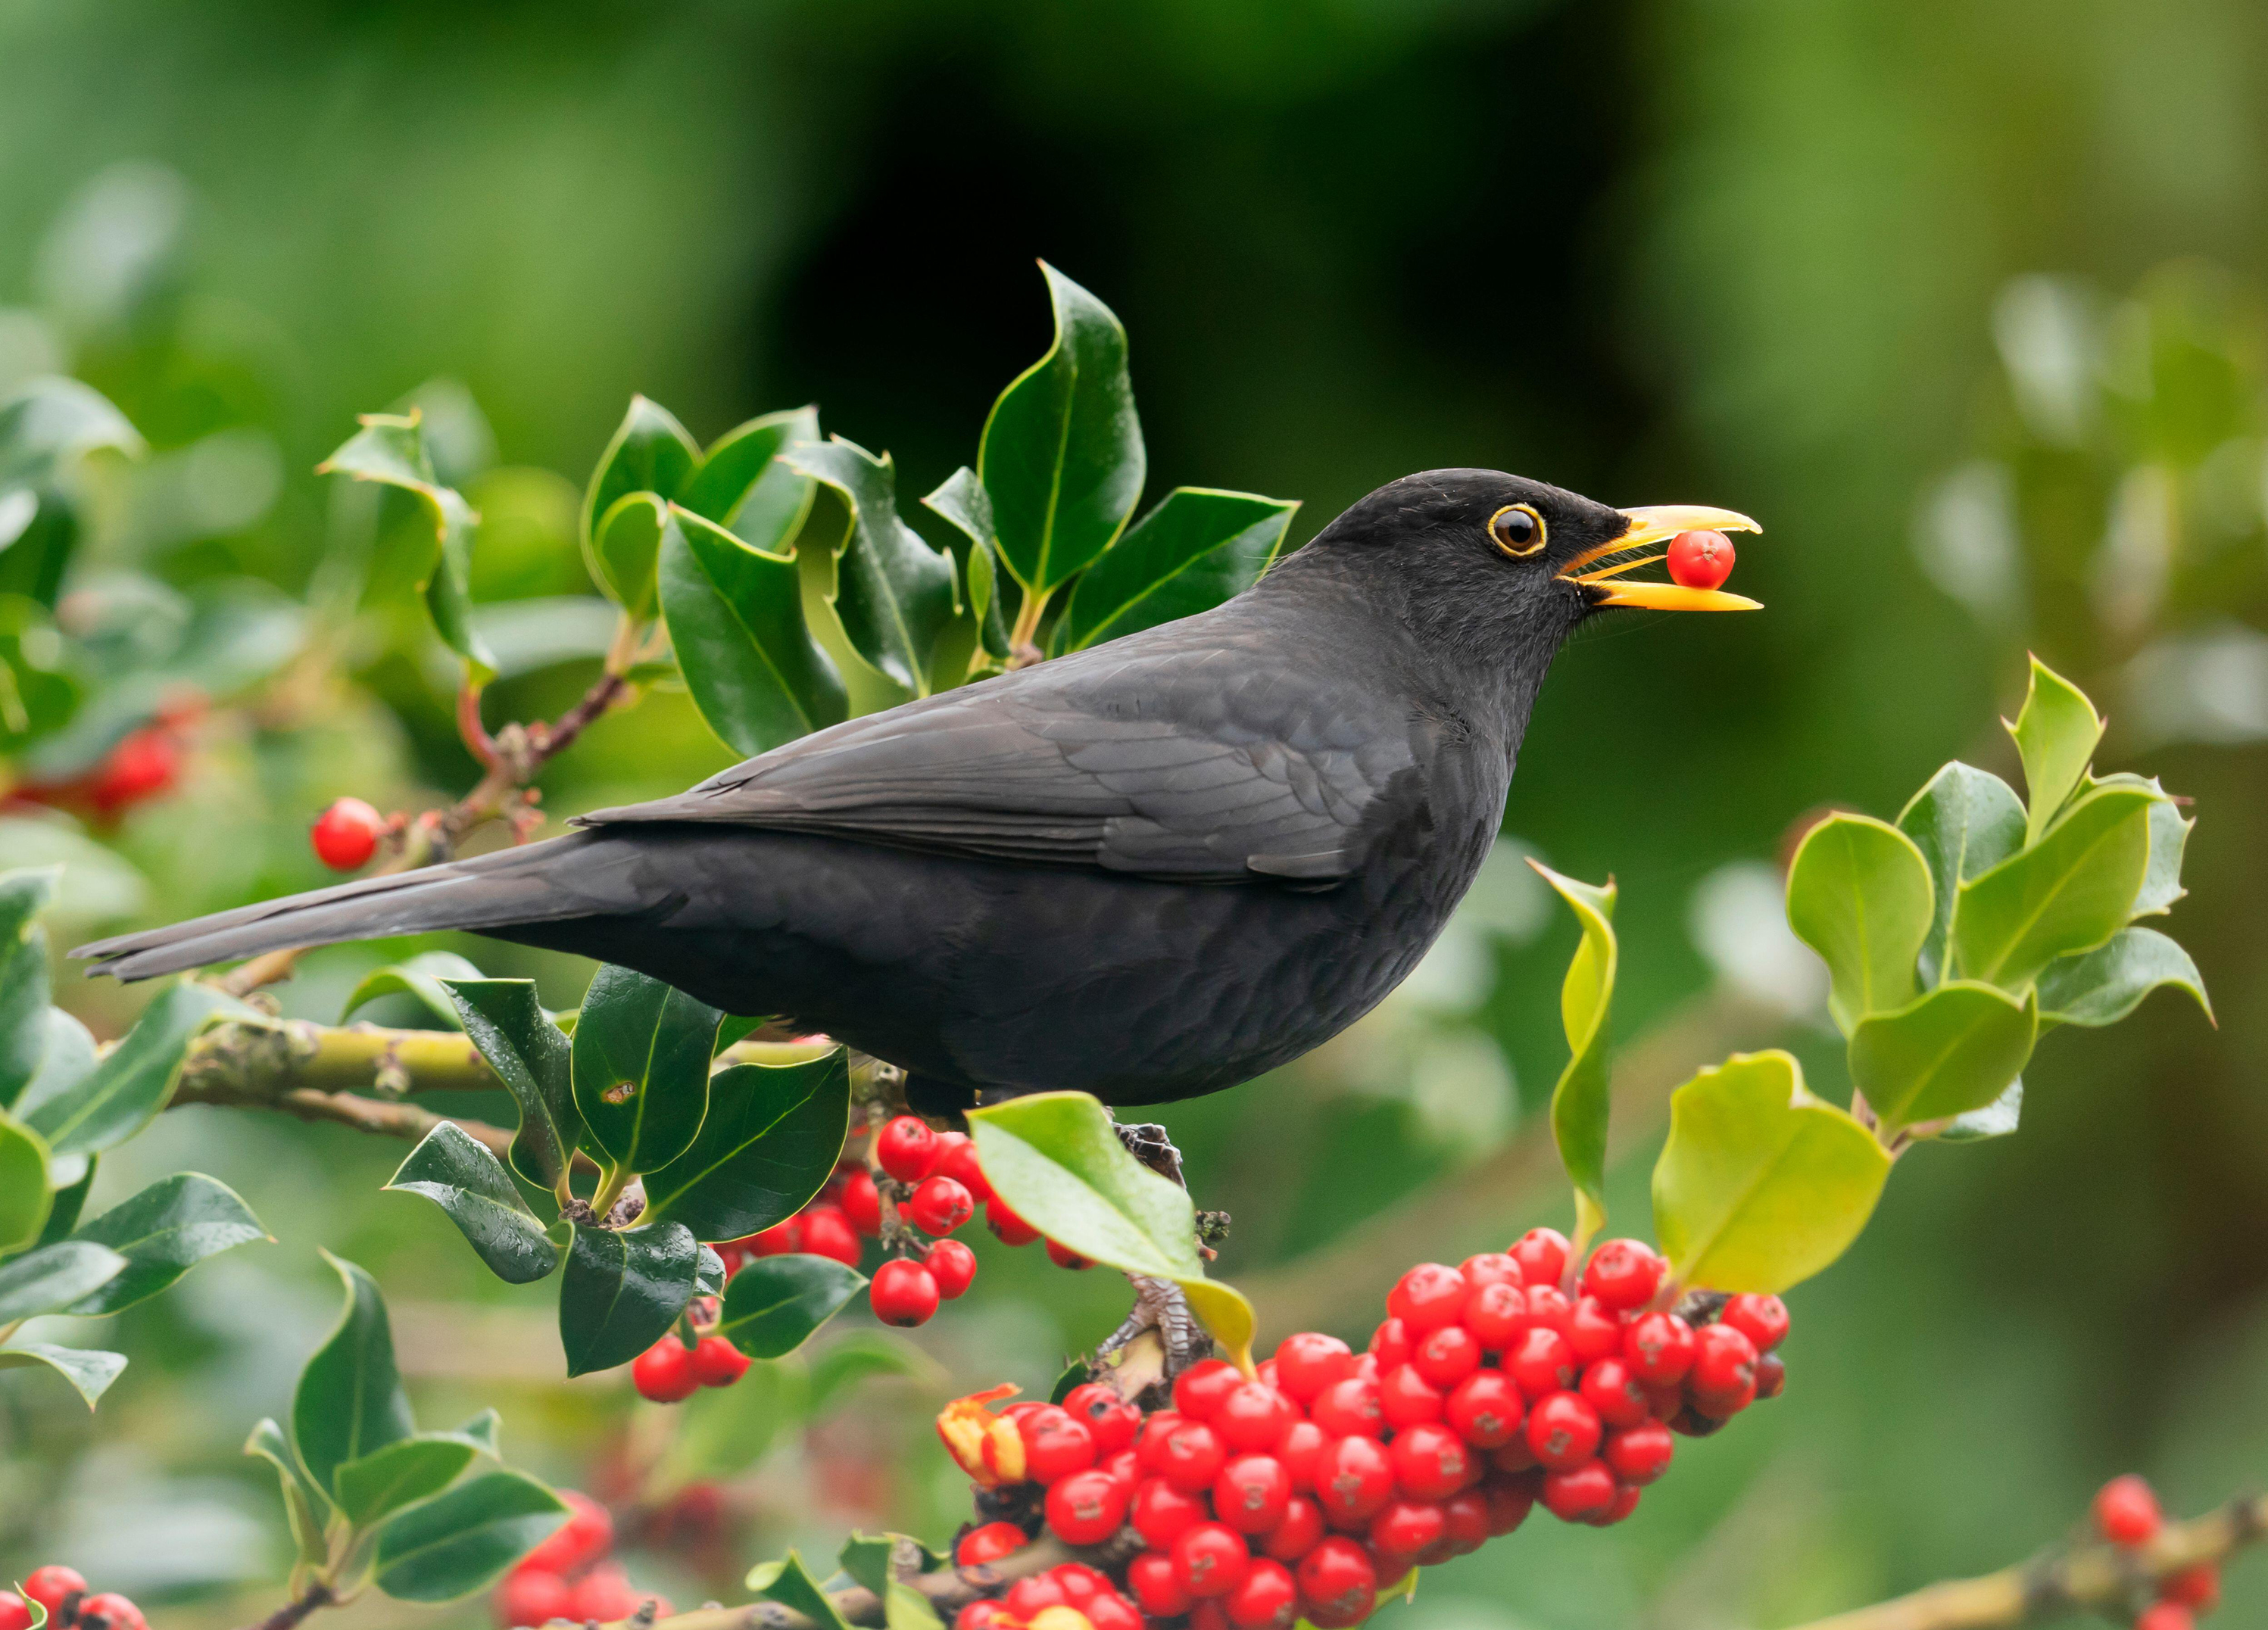 Blackbird eating holly berries (Alamy/PA)